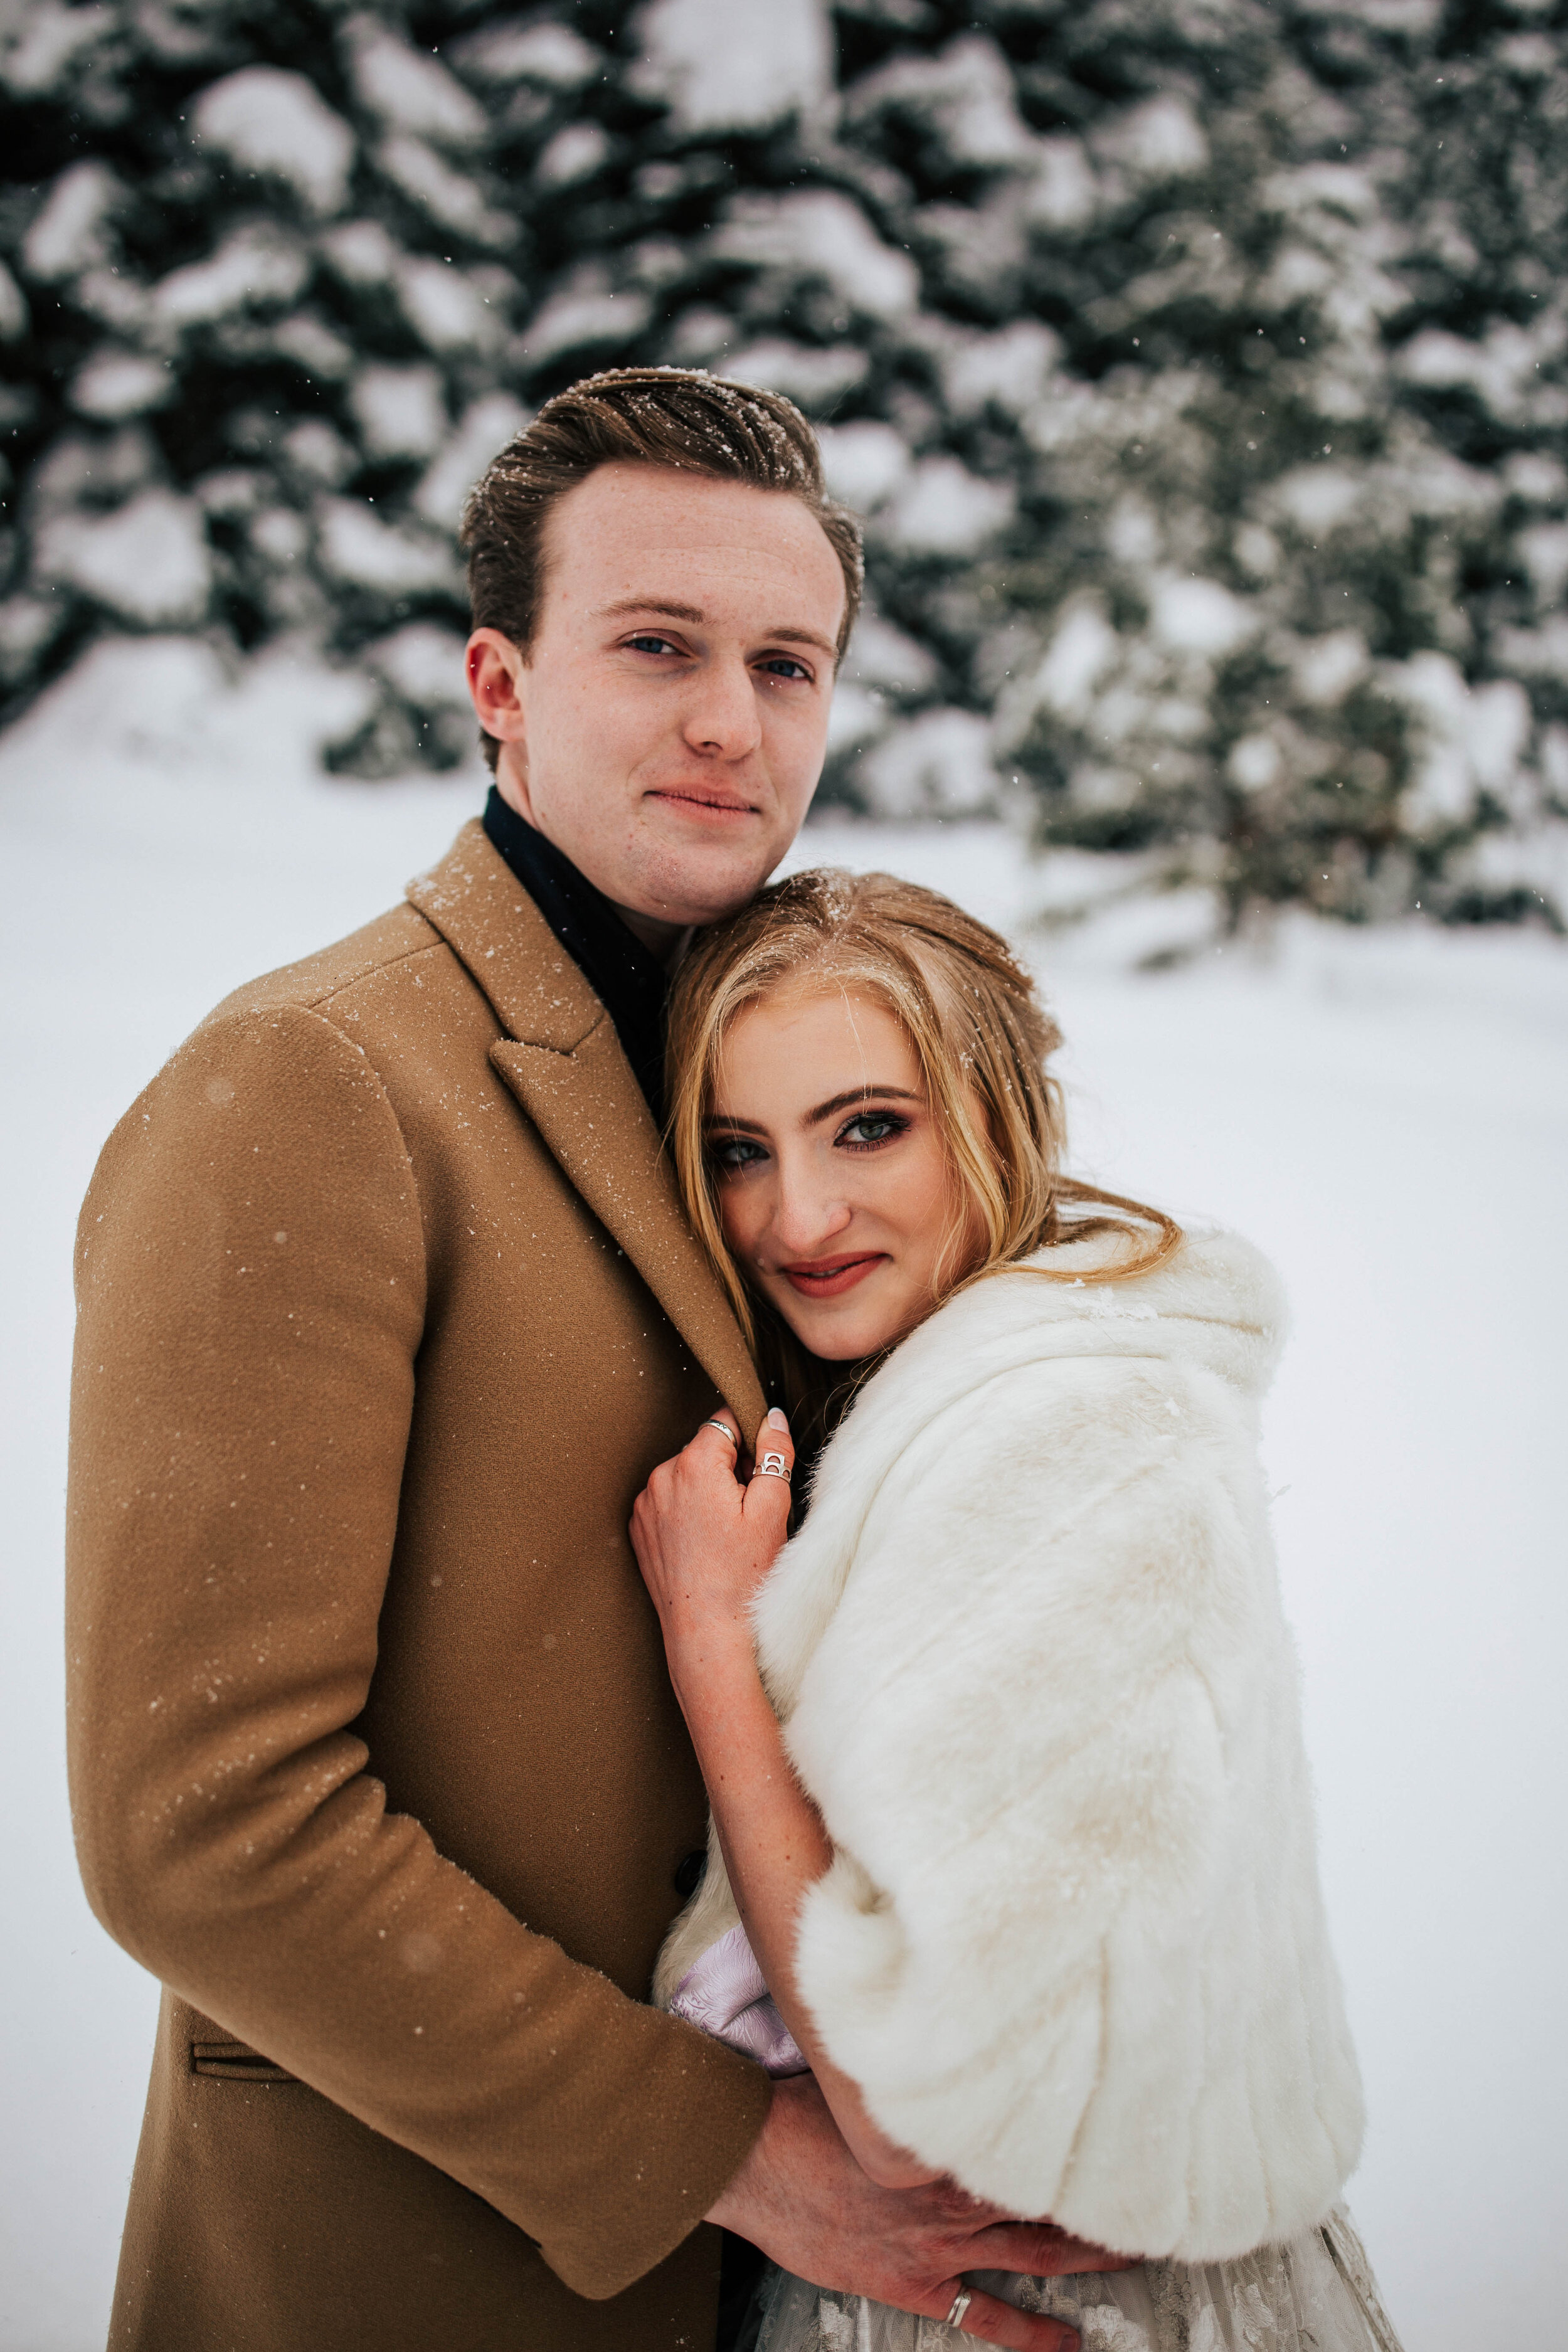 Wedding couple winter bridals snow photoshoot #elopement #winterwedding #weddingphotographer #bridals #bridalshoot #coupleshoot